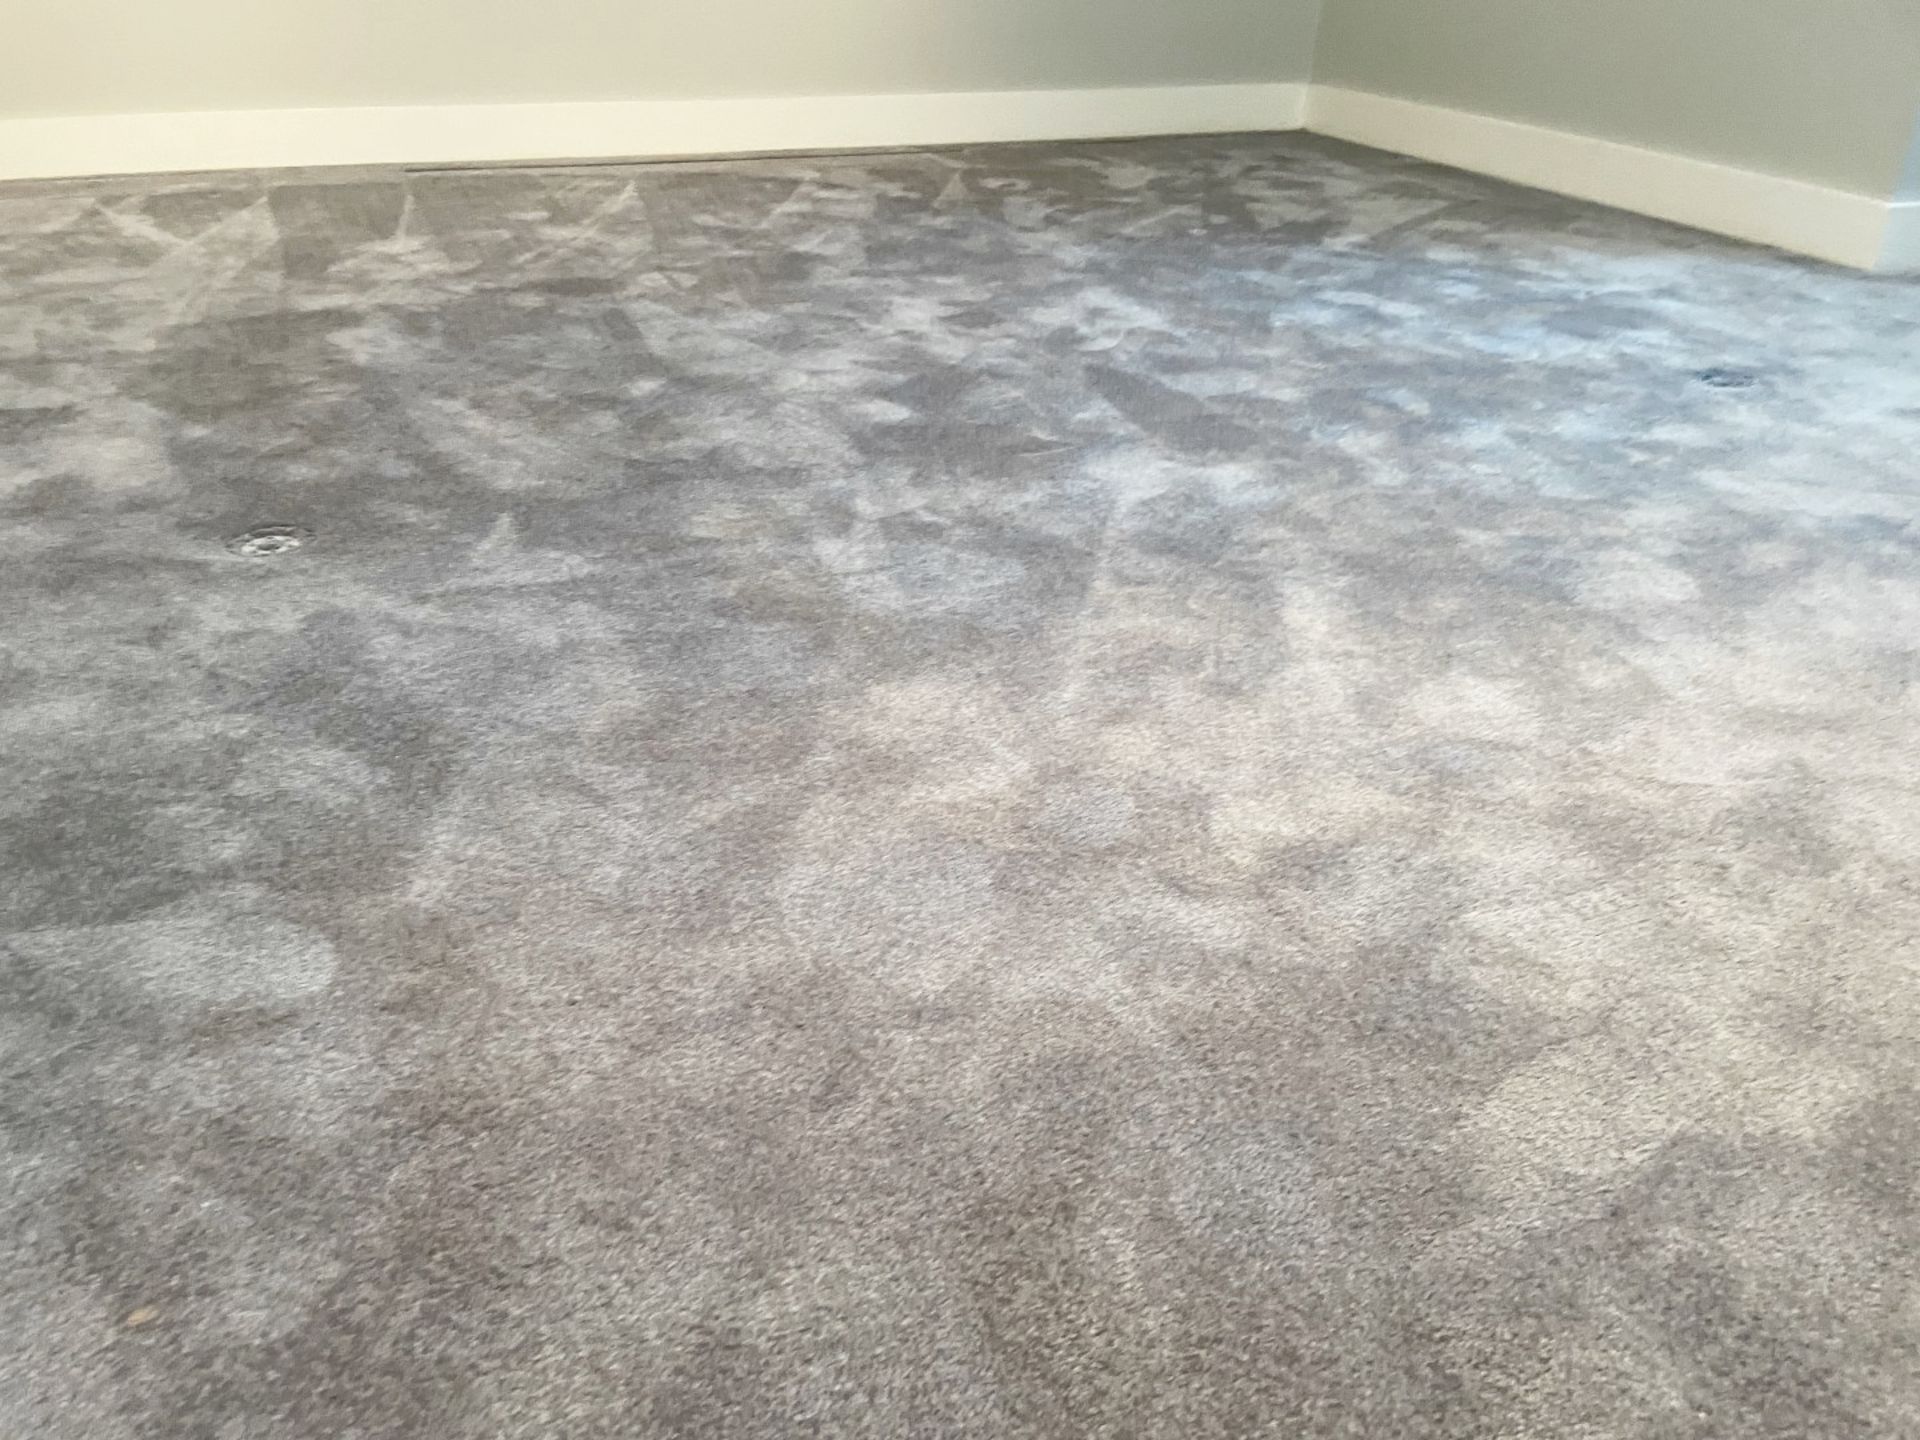 1 x Premium Bedroom Carpet In Grey (4.6 x 3.2m) - Ref: FRNT-BD/2ndFLR - CL742 - Image 3 of 6